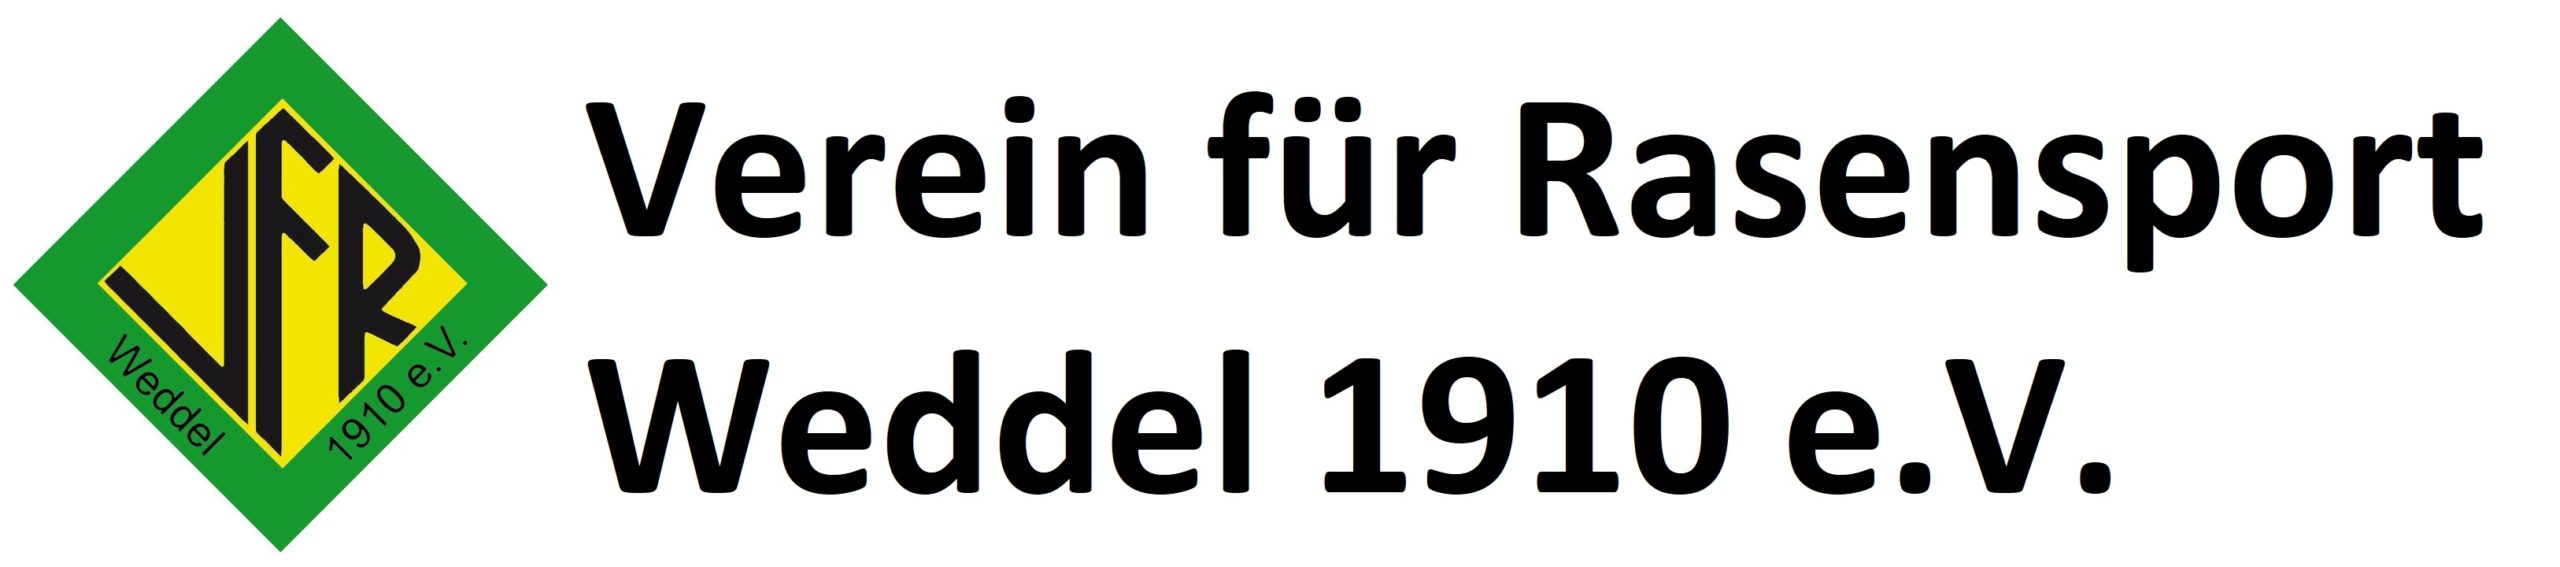 VfR Weddel 1910 e.V. Logo